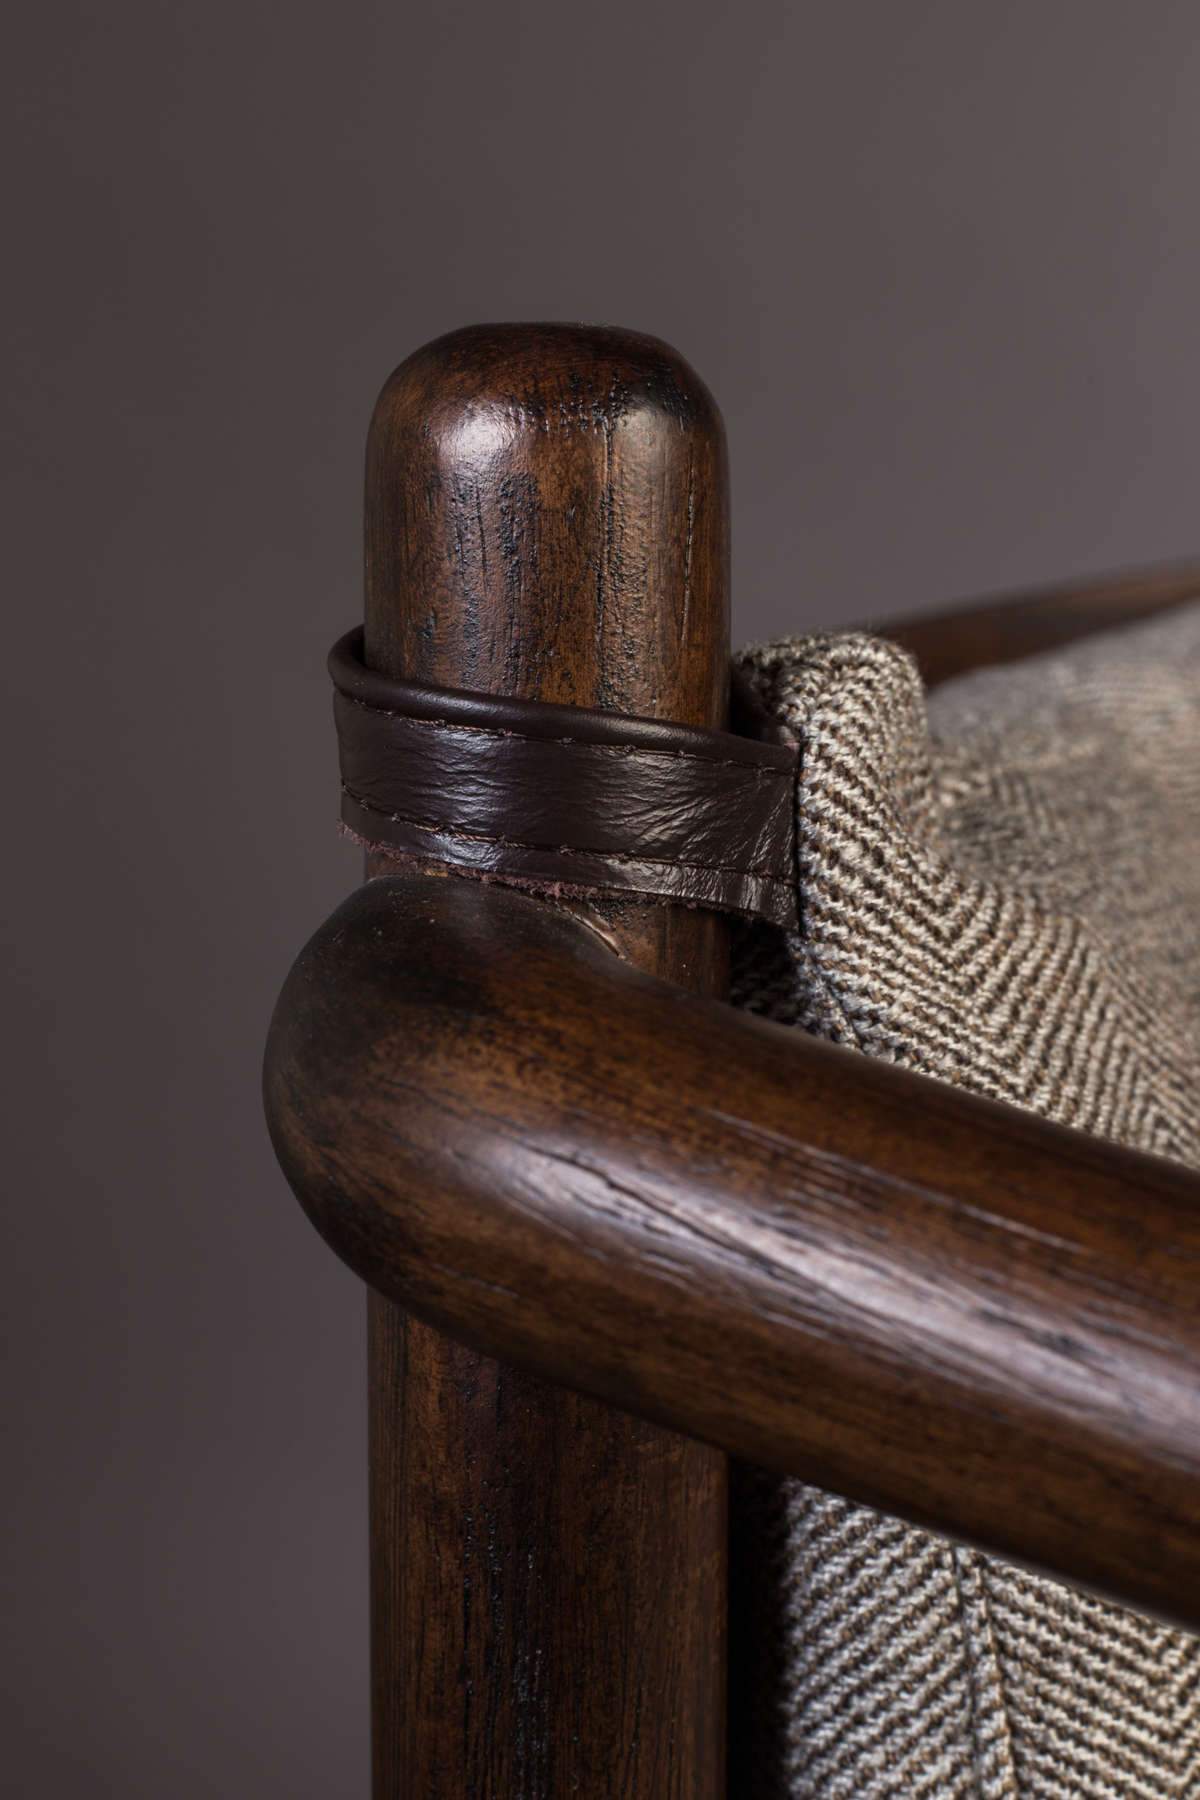 TORRANCE armchair beige, Dutchbone, Eye on Design